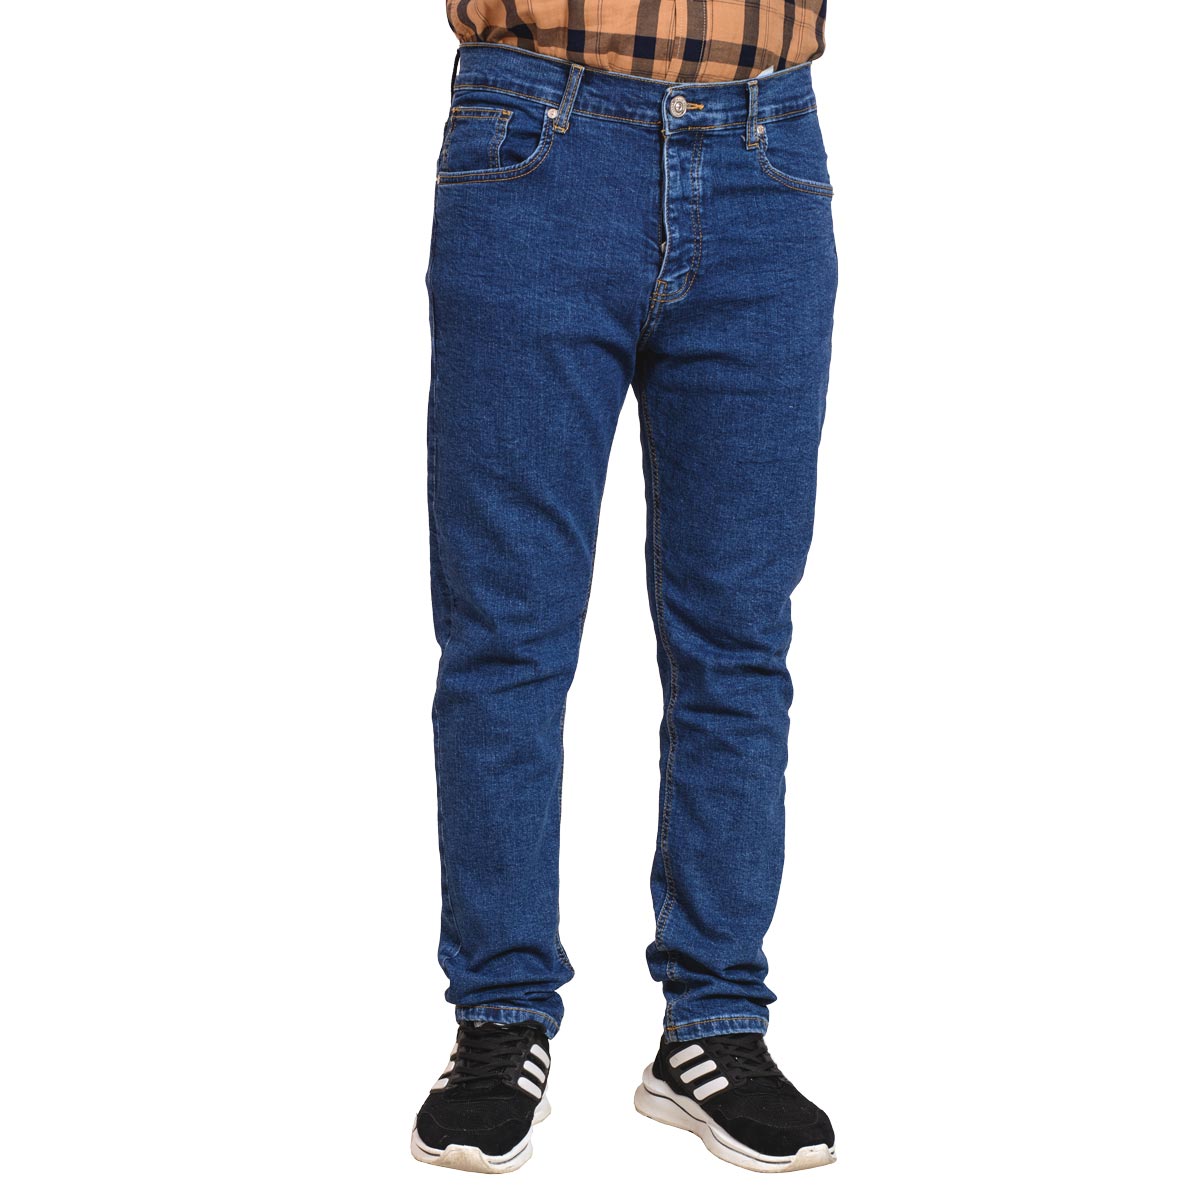 23GM-35-1-56558-4-بنطلون جينز Jeans-Pant, بنطلون, بنطلون جينز رجالي, Pukkastyle